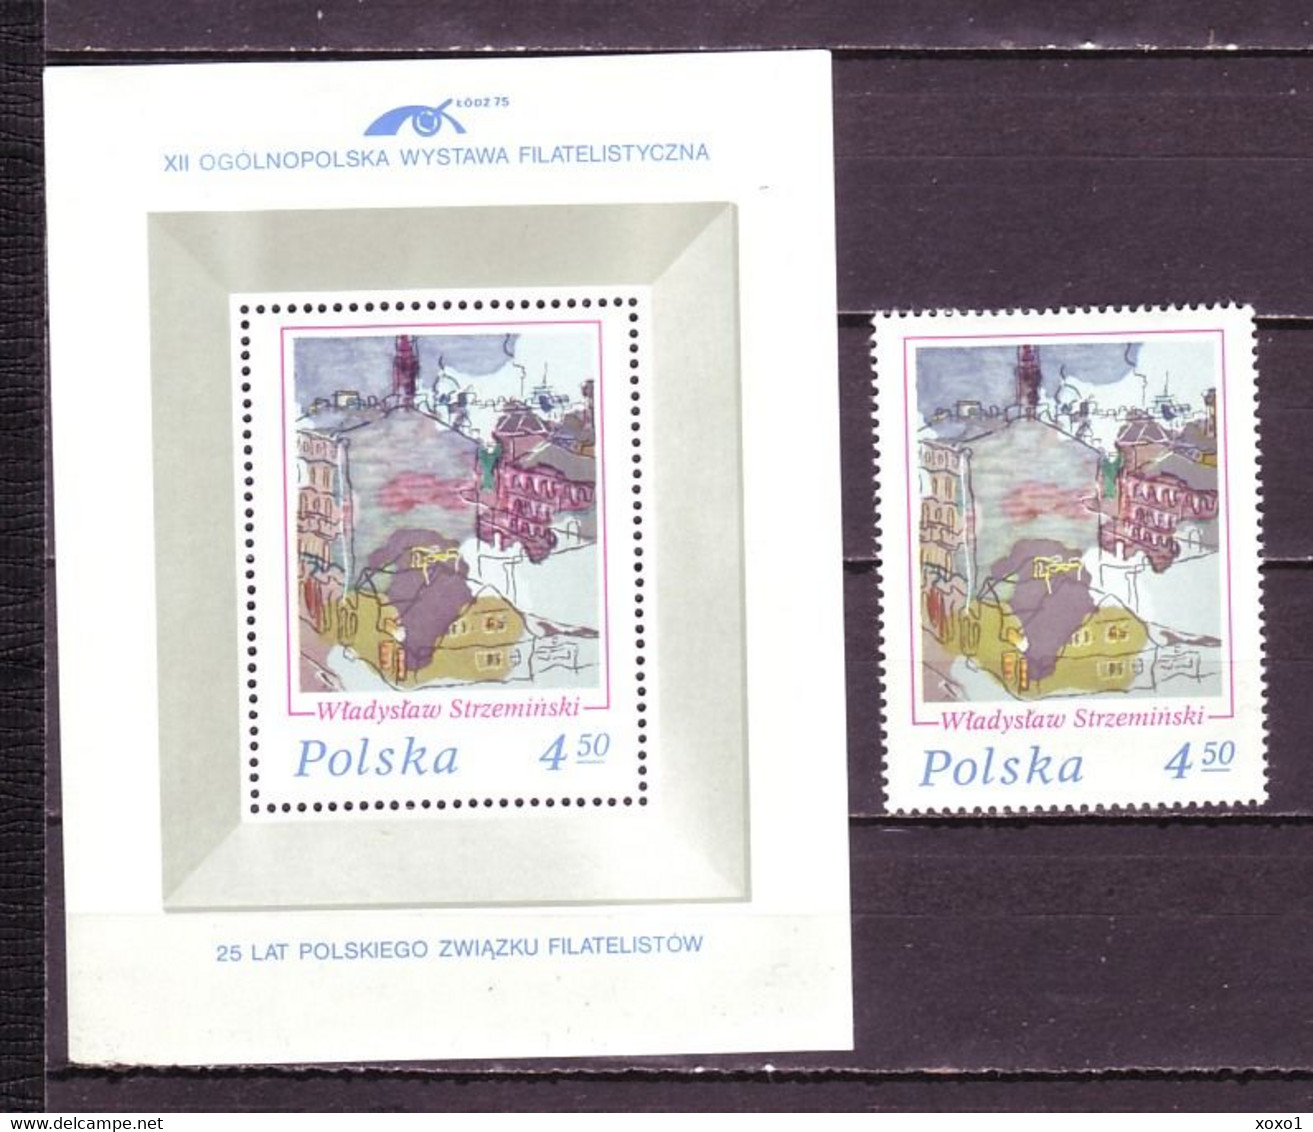 Poland 1975 MiNr. 2415(Block 64) Polen Art Painting Avant-garde 1v+1bl MNH** 2,50 € - Impresionismo